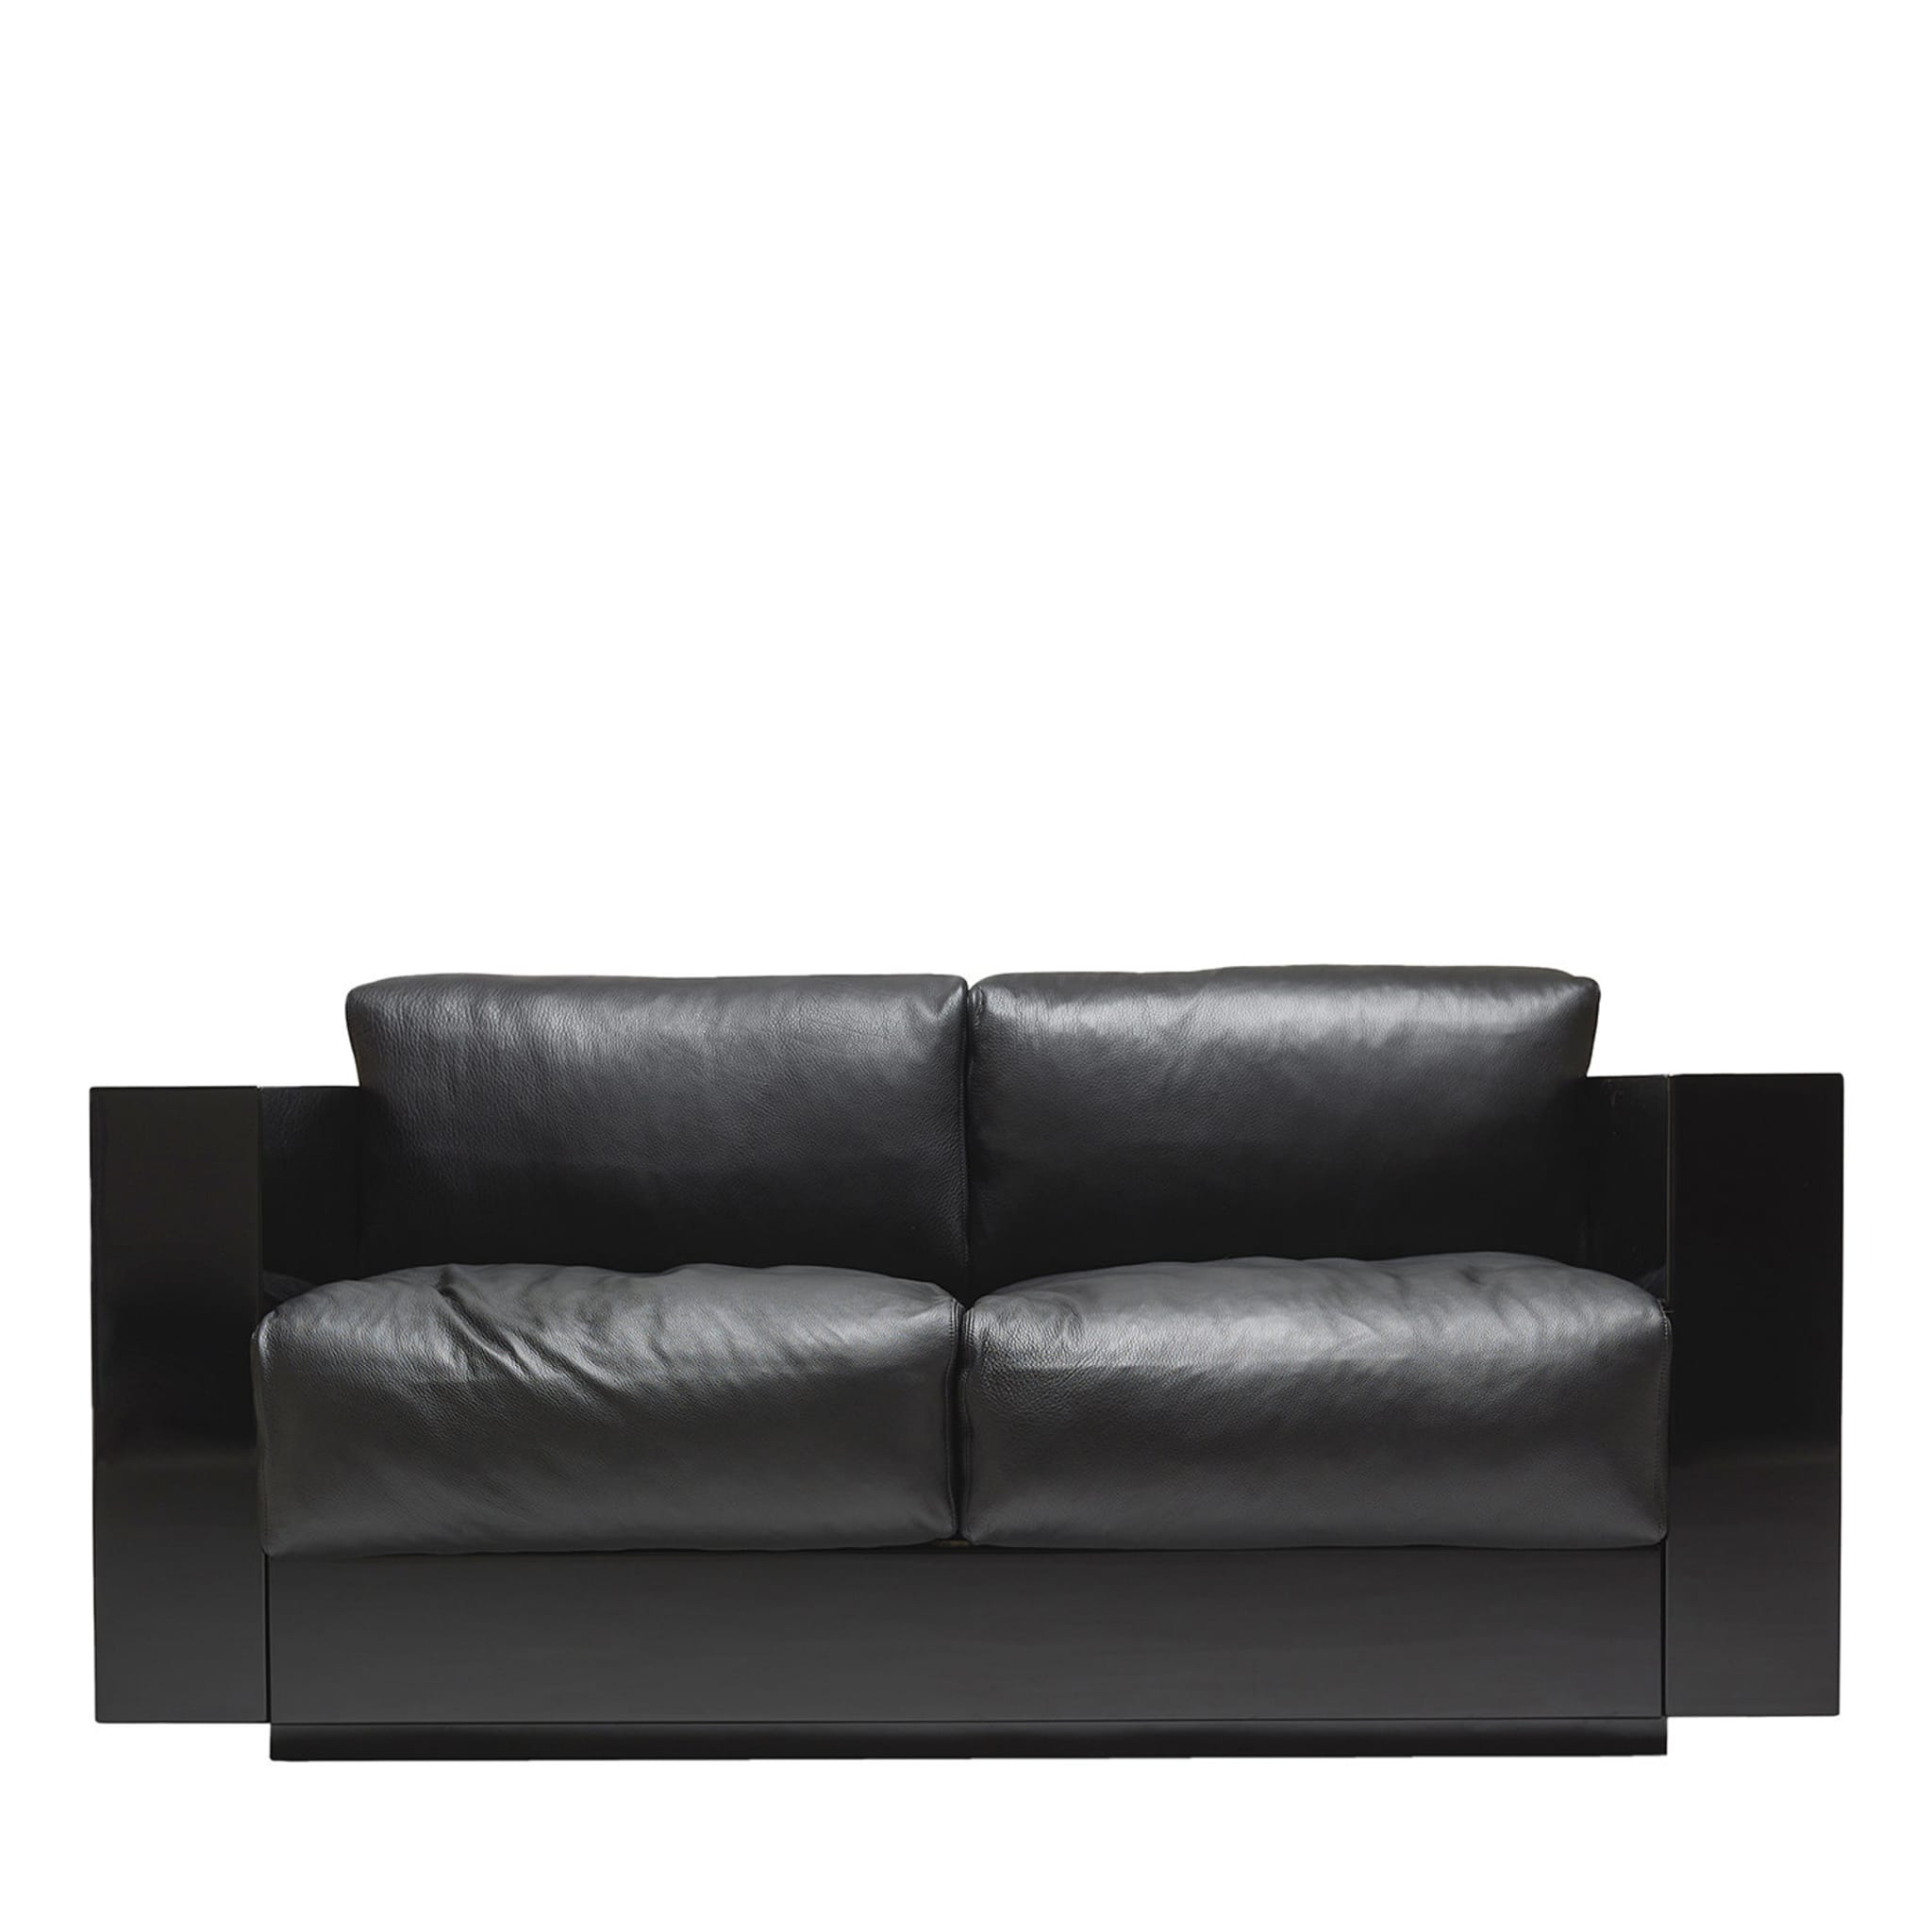 Saratoga Black 2-Seat Sofa by Lella and Massimo Vignelli - Main view